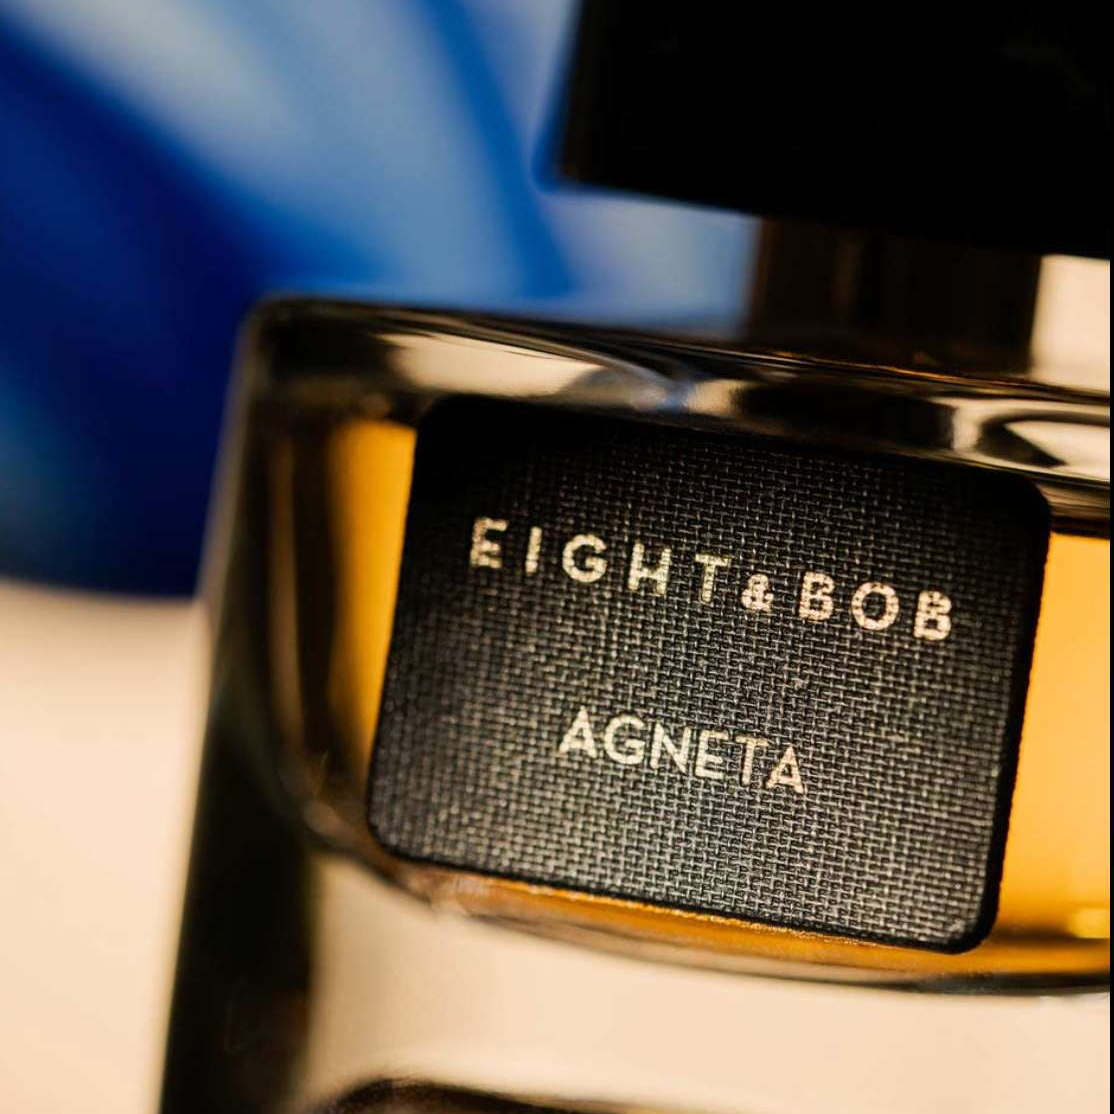 AGNETA - Eight & Bob - INDIEHOUSE modern fragrances